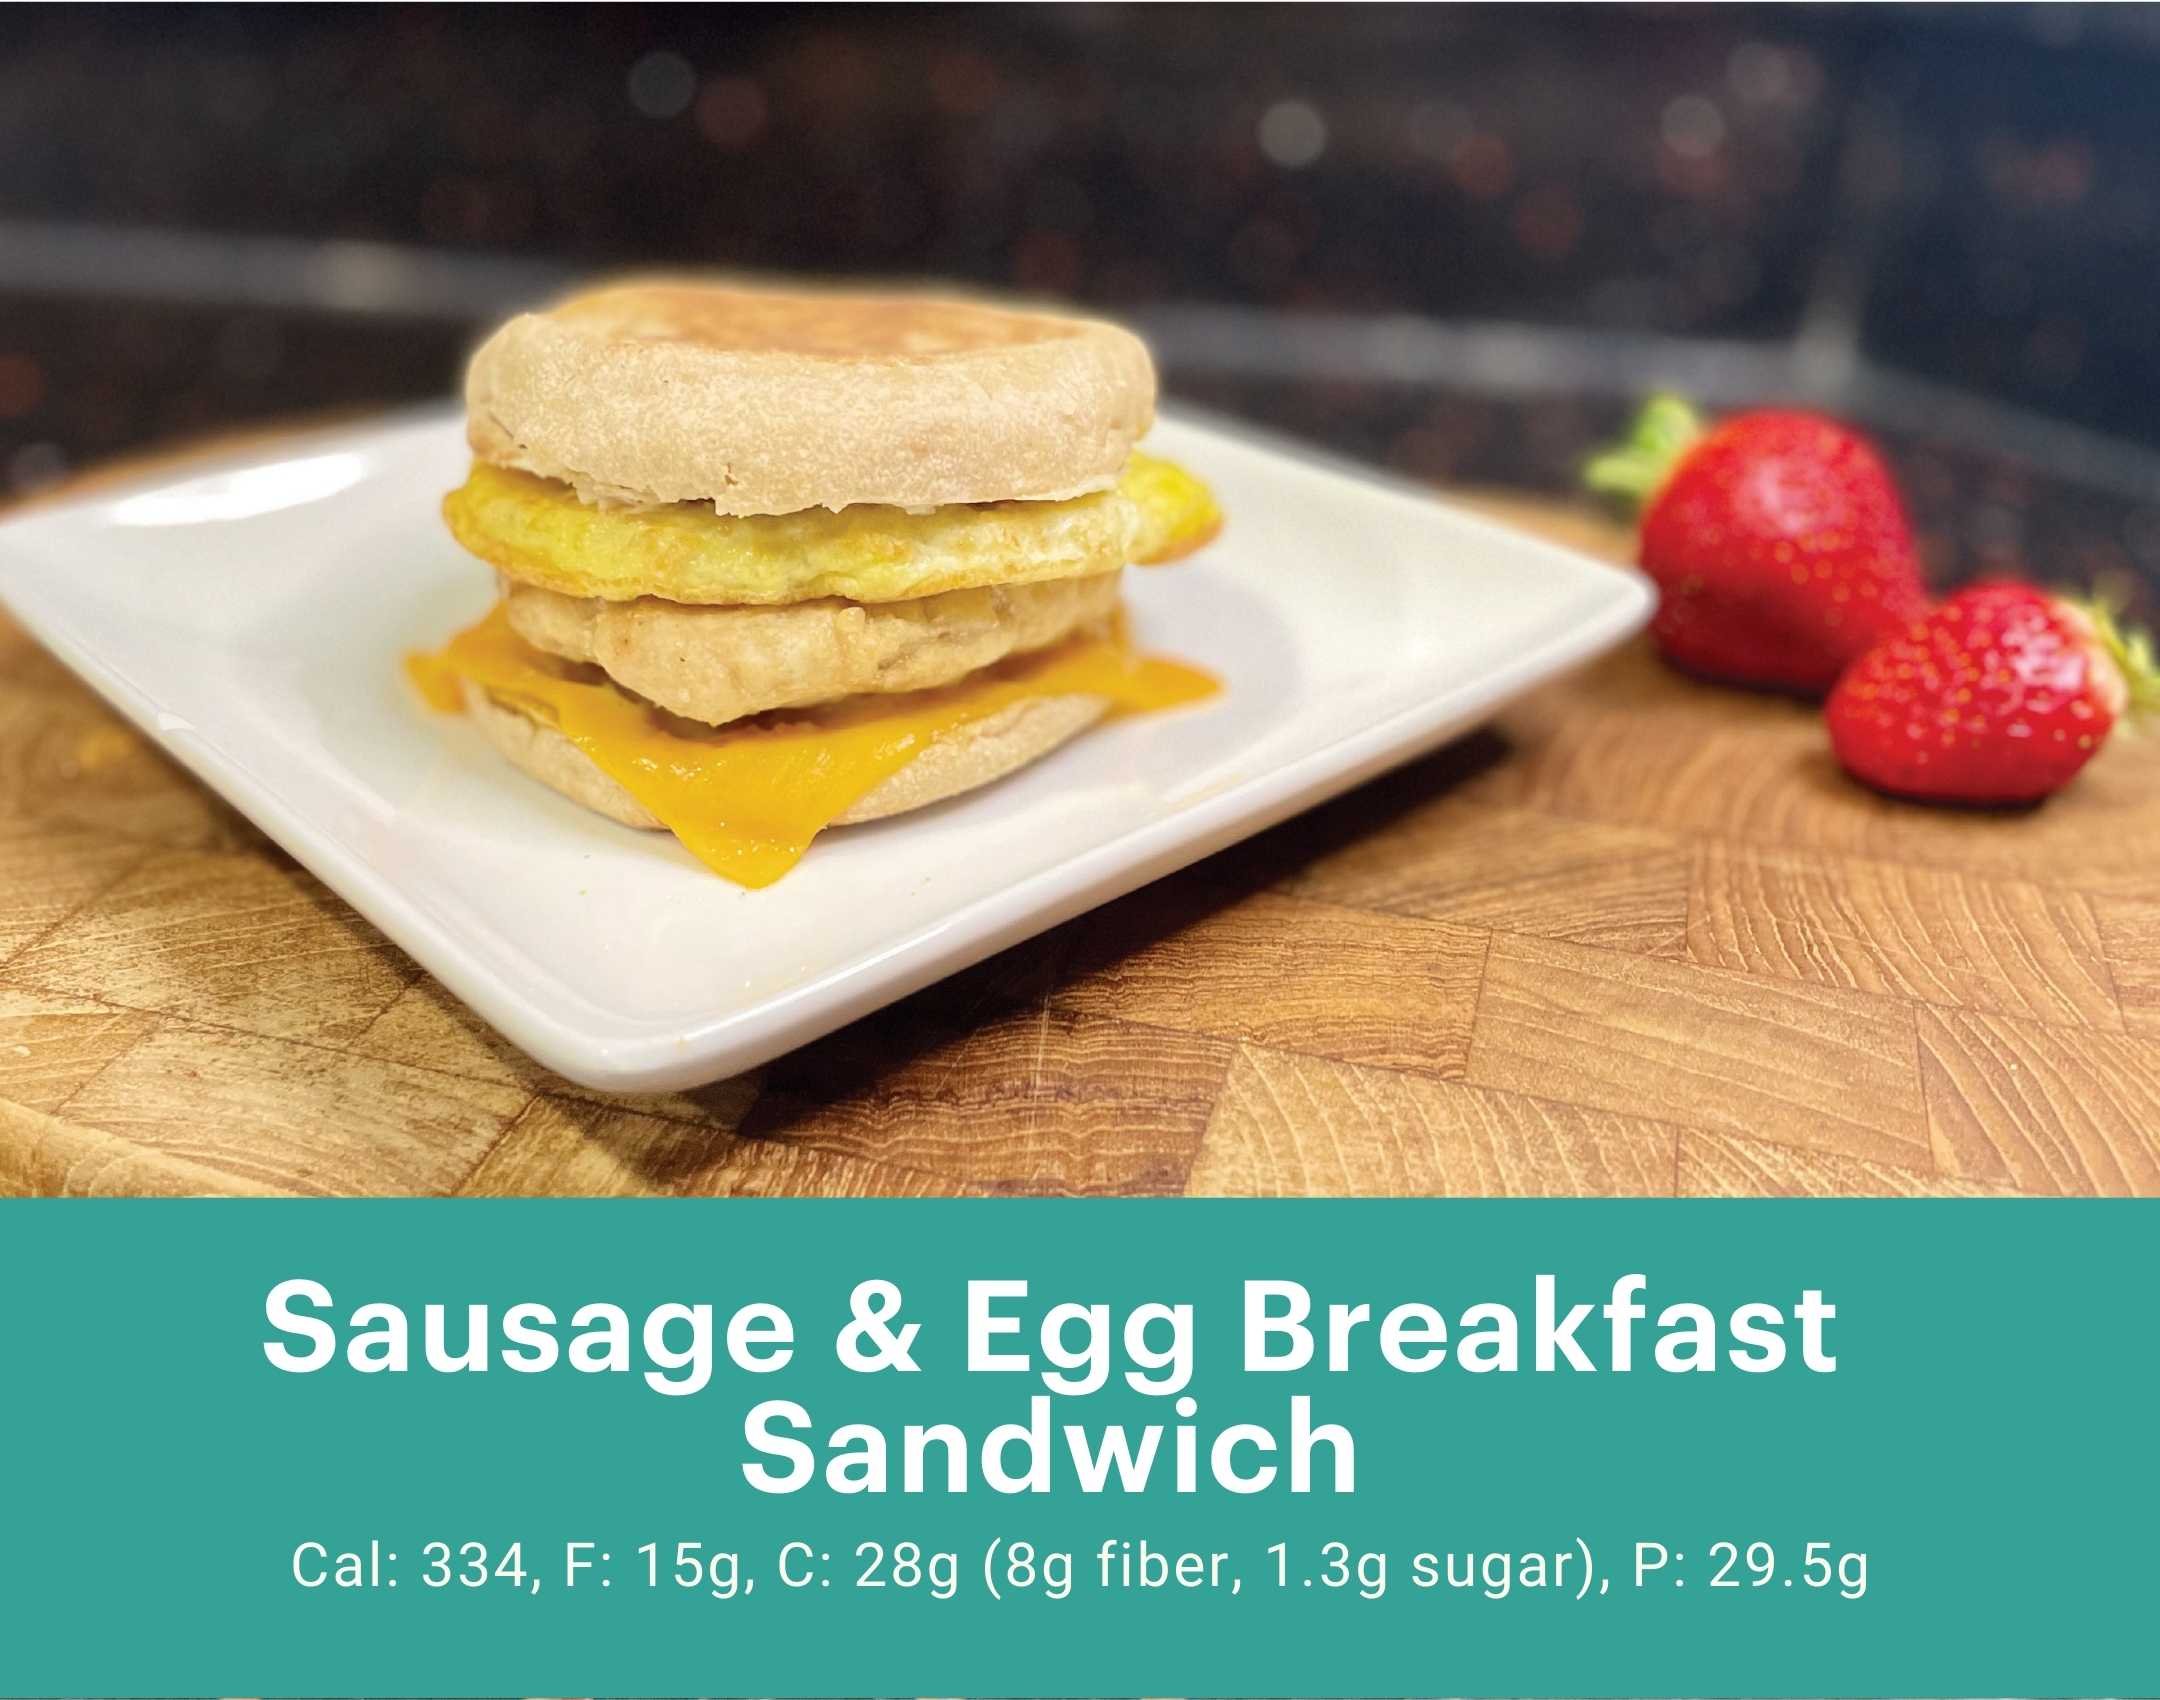 Sausage & Egg Breakfast Sandwich.jpg